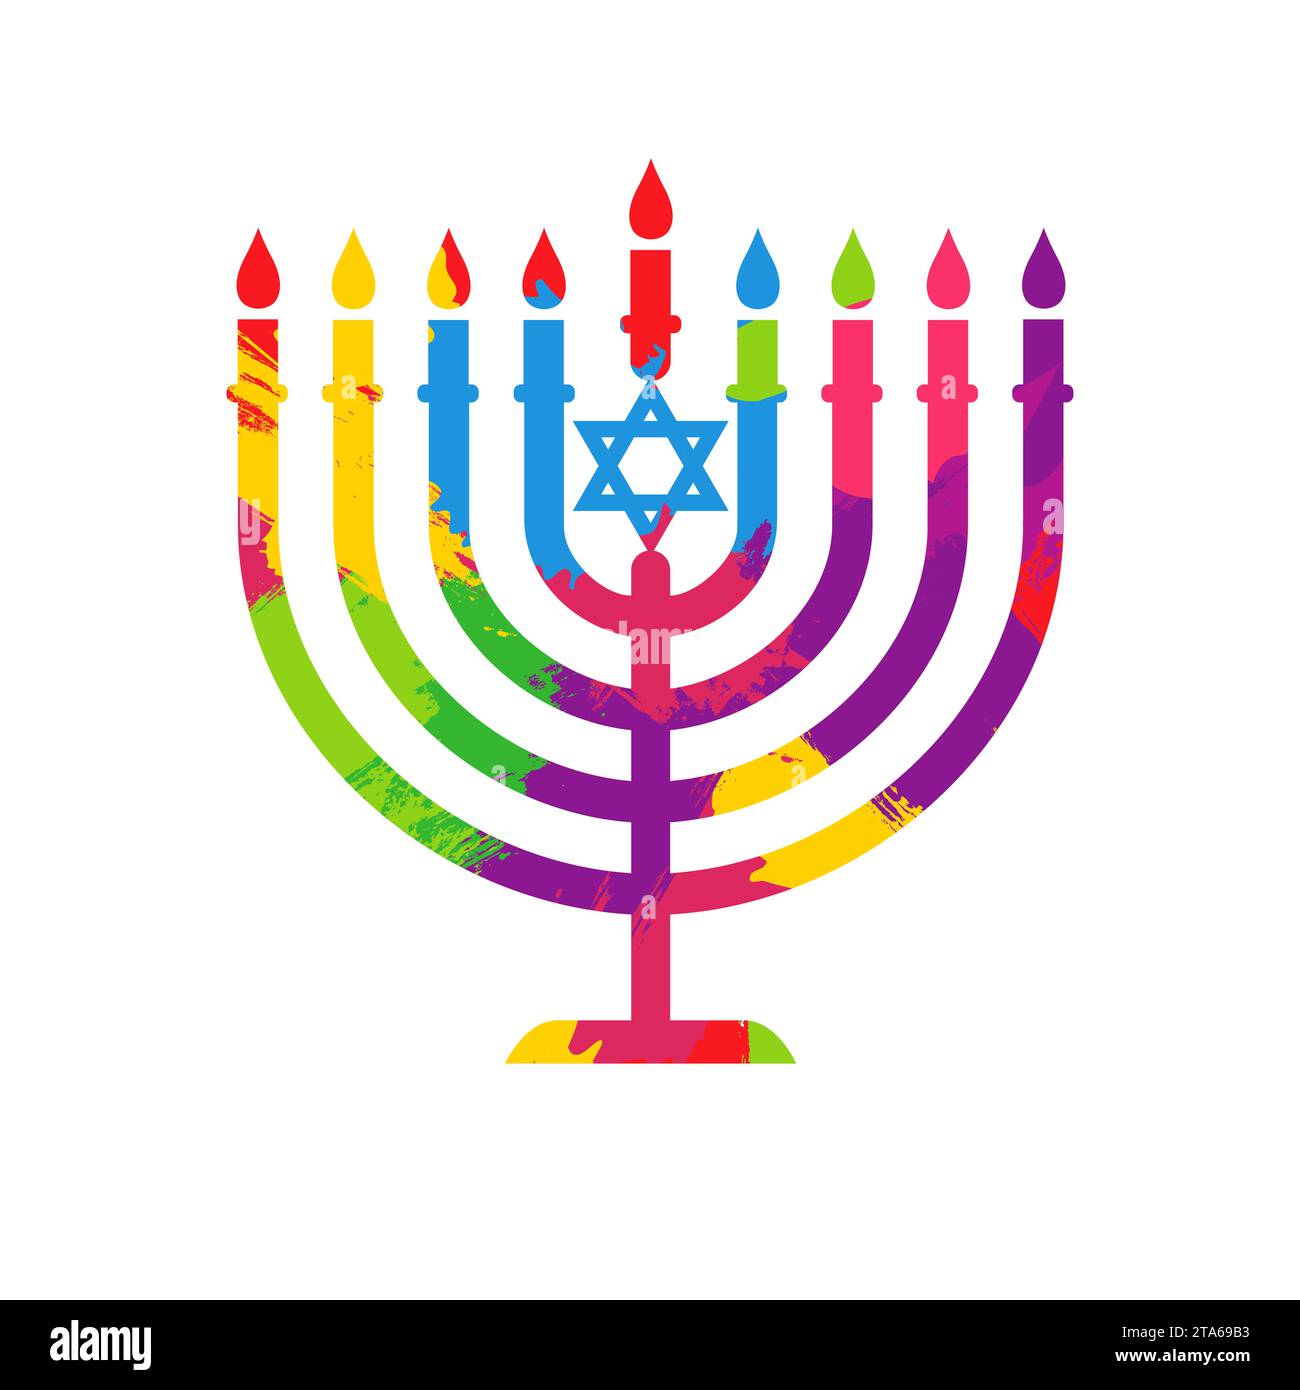 Drawn style hanukkah menorah. Happy Hanukkah Jewish festival of lights,  menorah candle icon with colored ink blots texture. Vector illustration Stock Vector